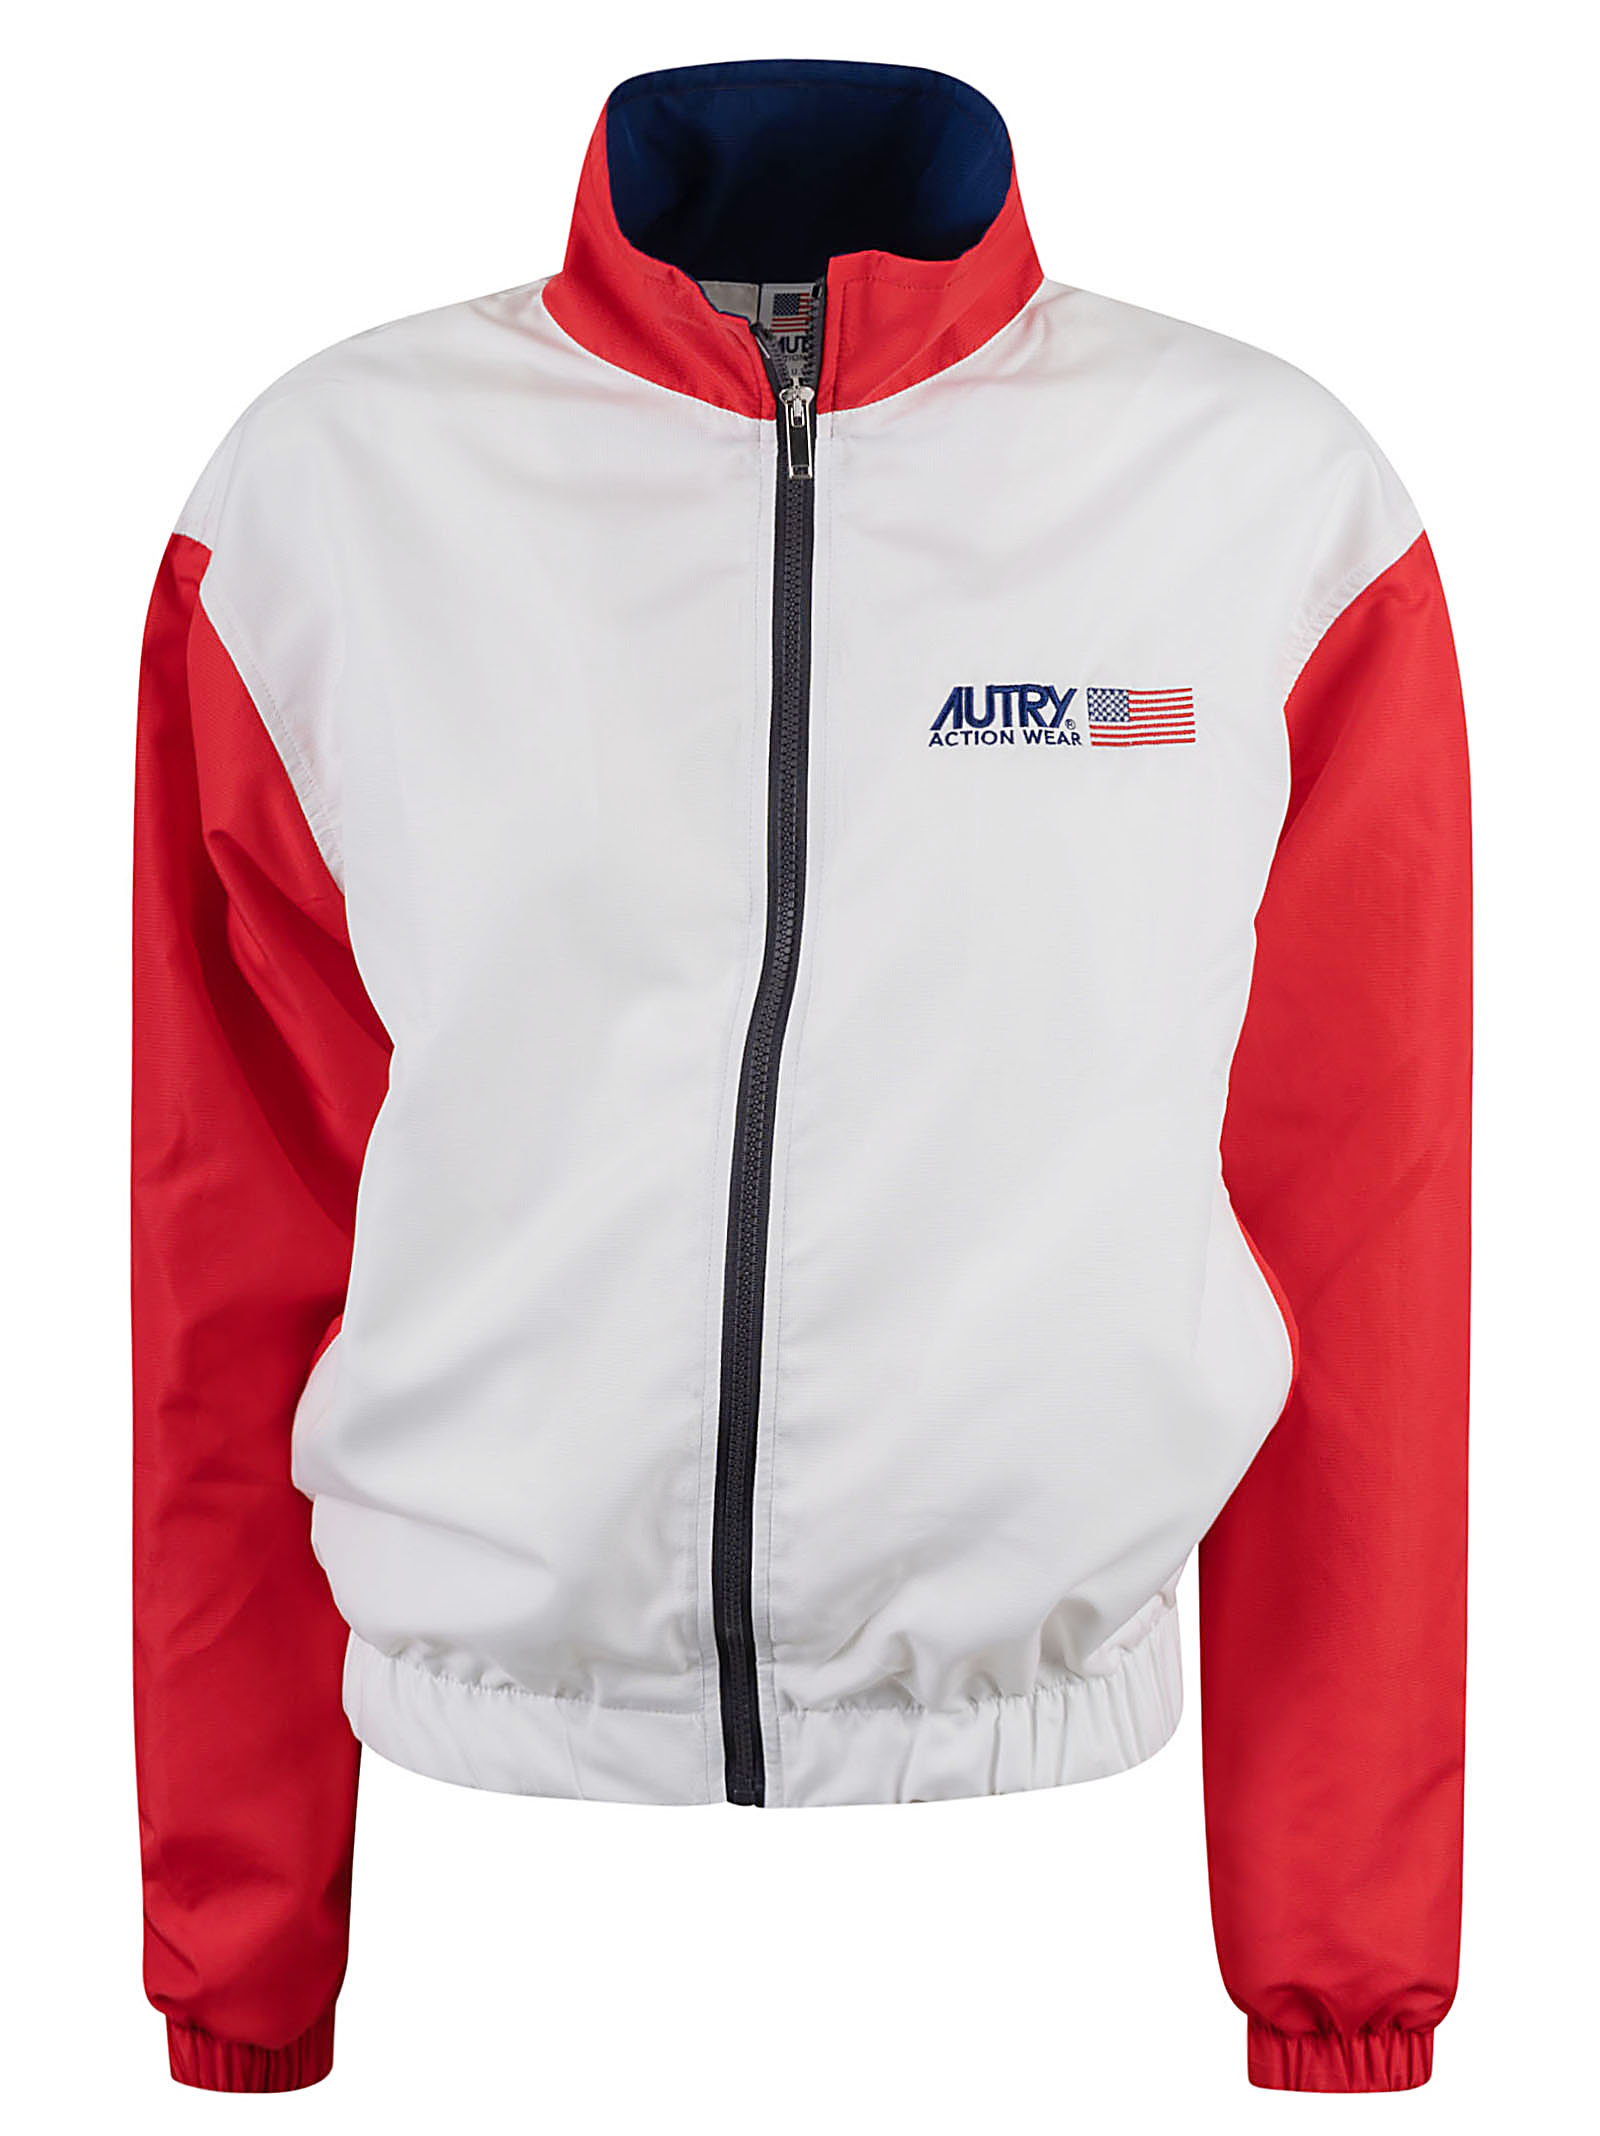 Autry Logo Chest Jacket